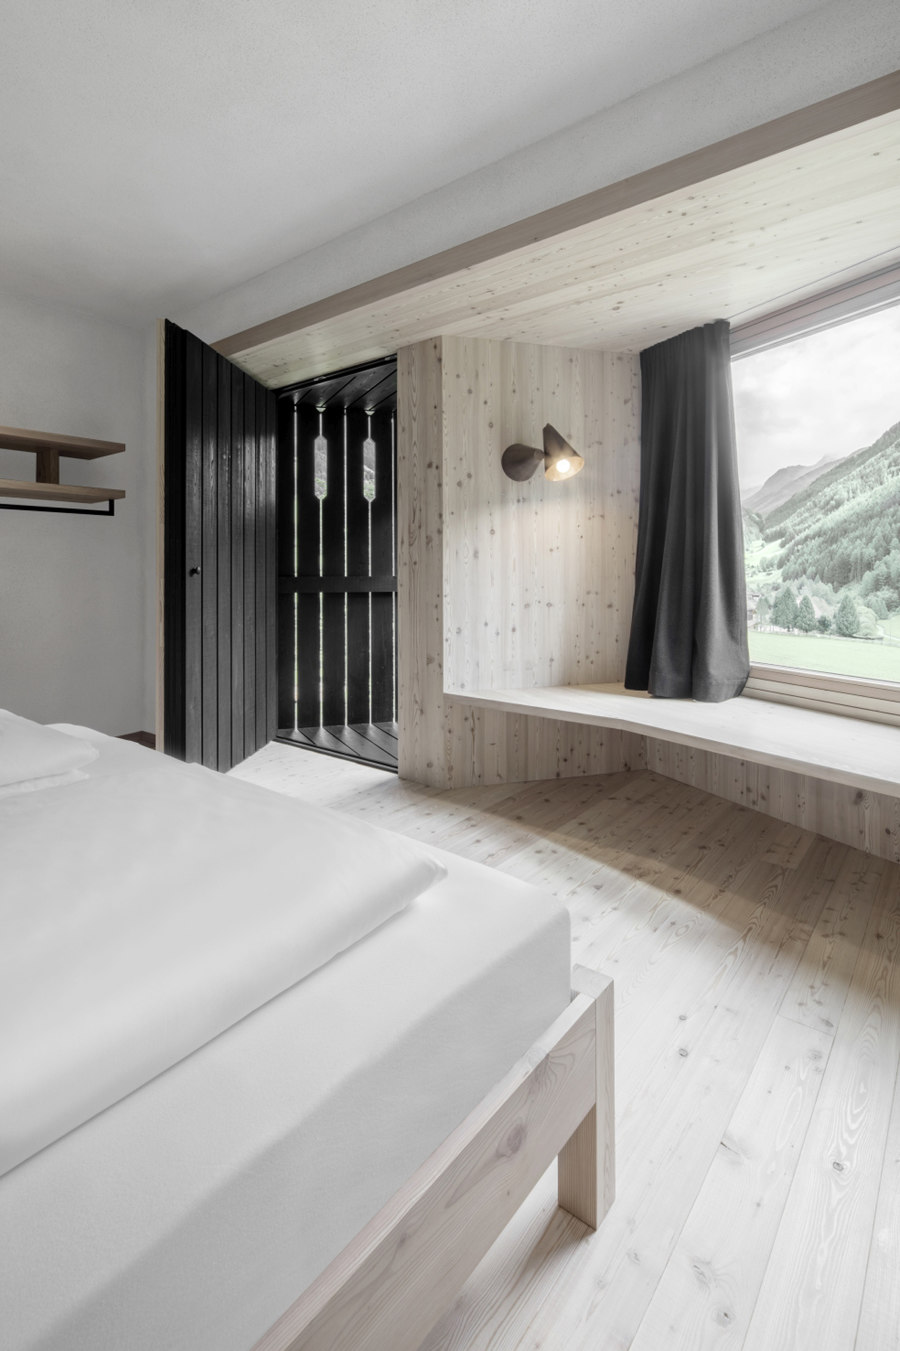 Hotel Bühelwirt by Pedevilla Architects | Hotels